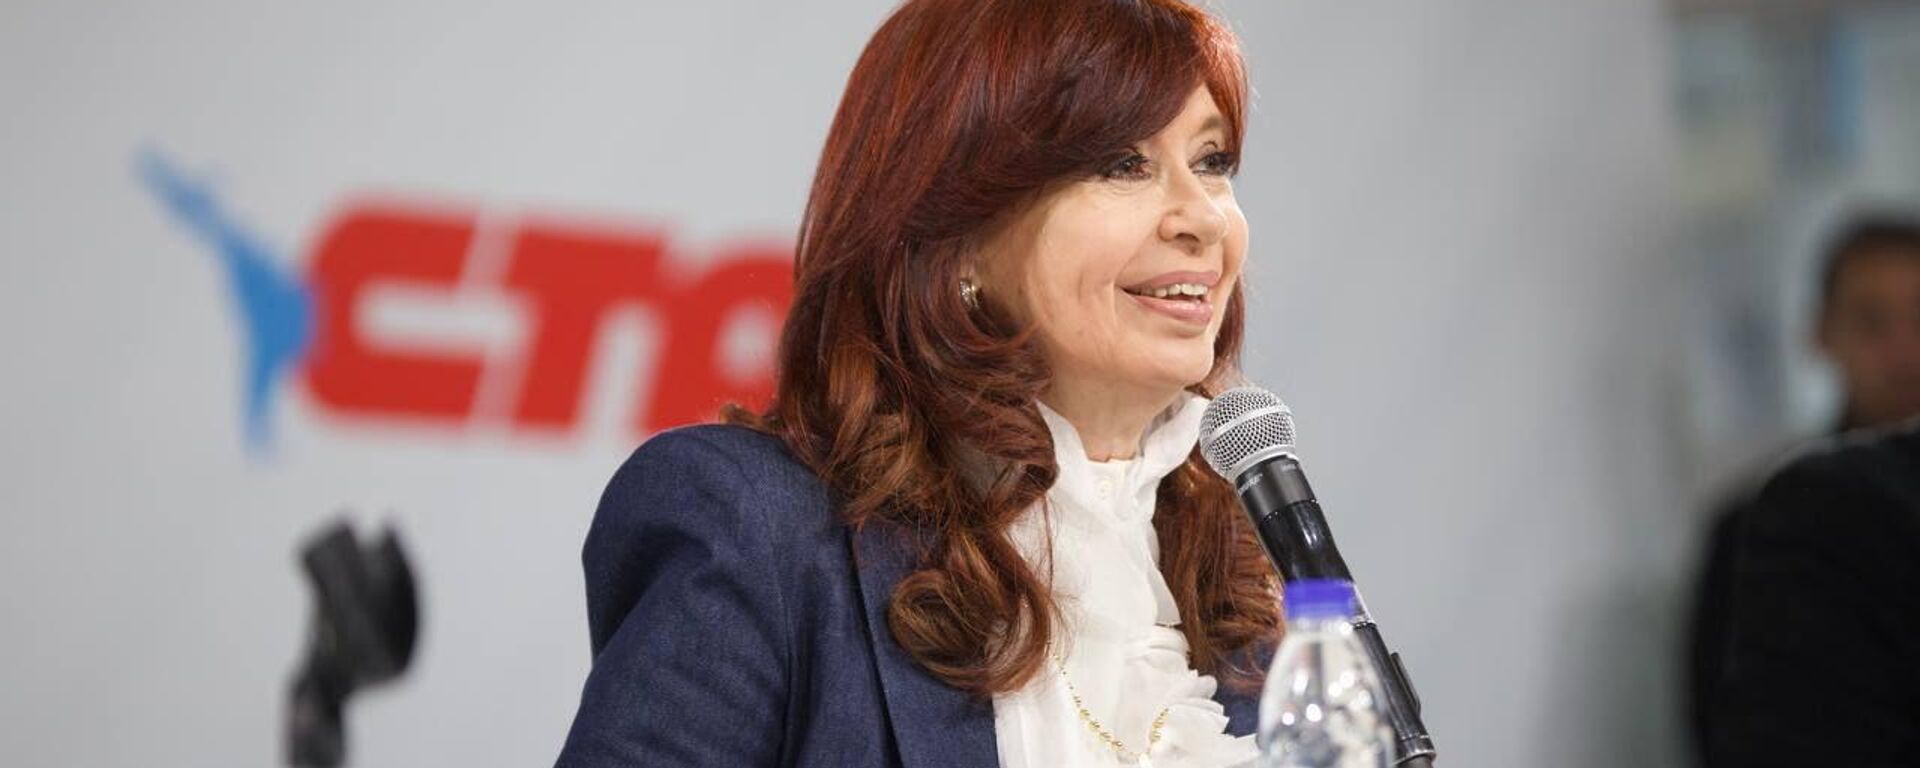 Cristina Fernández de Kirchner en el Plenario de la Central de Trabajadores de la Argentina (CTA) en Avellaneda - Sputnik Mundo, 1920, 30.06.2022